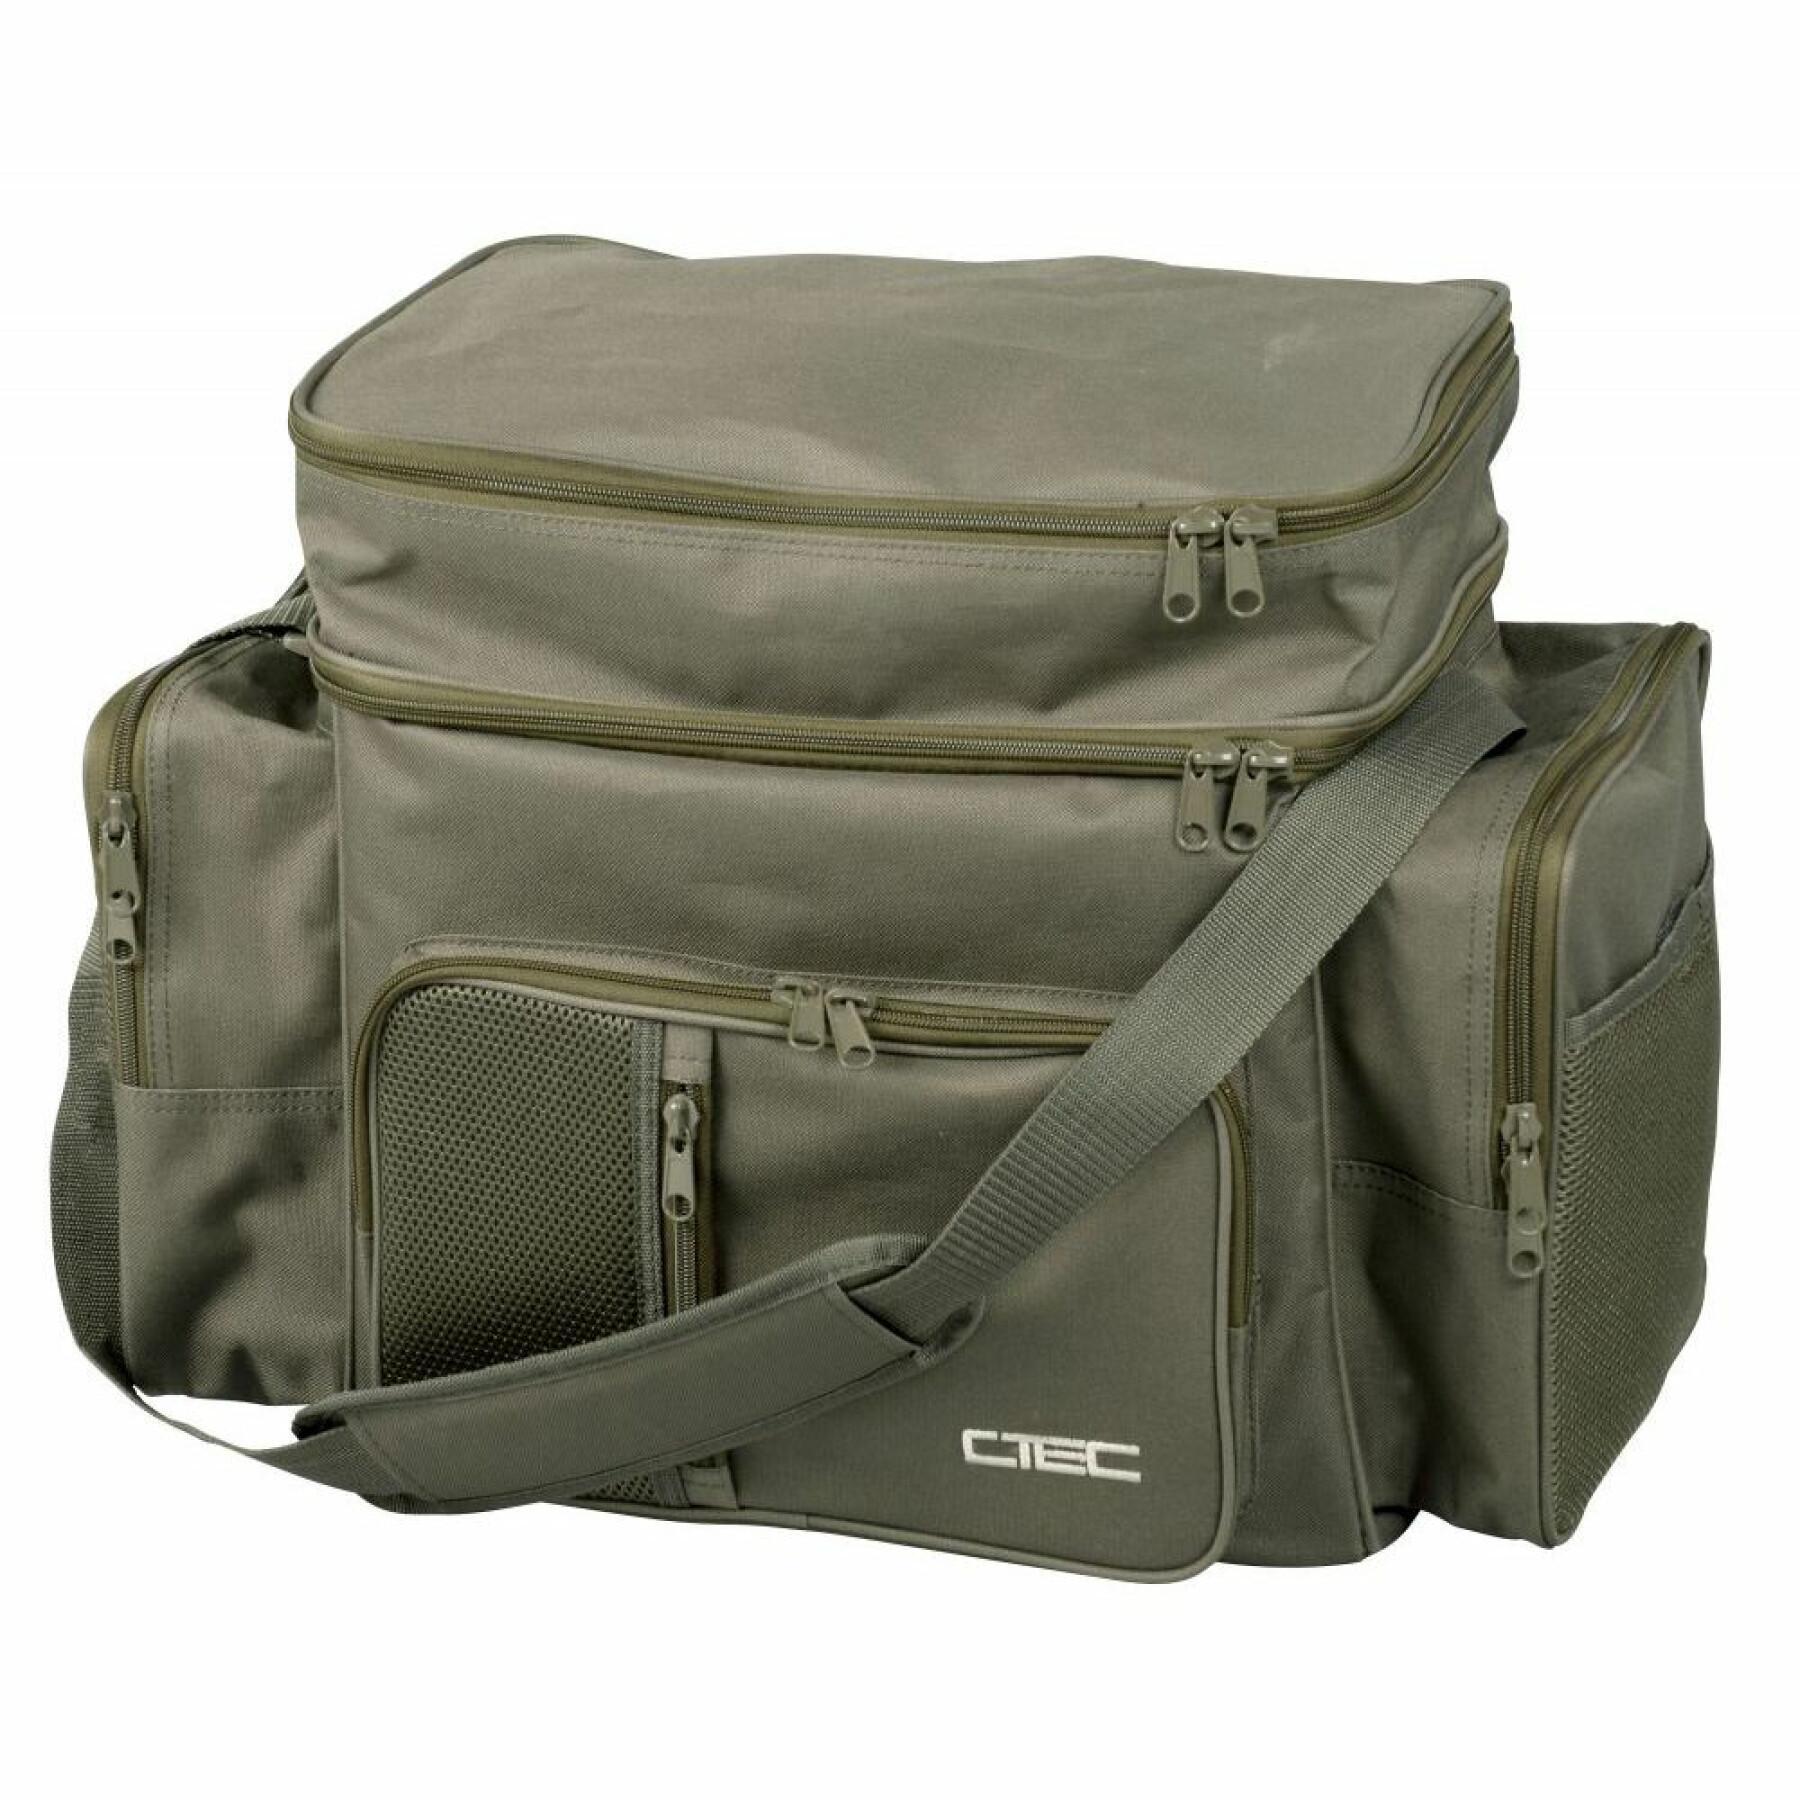 Alles dragen C-Tec base bag